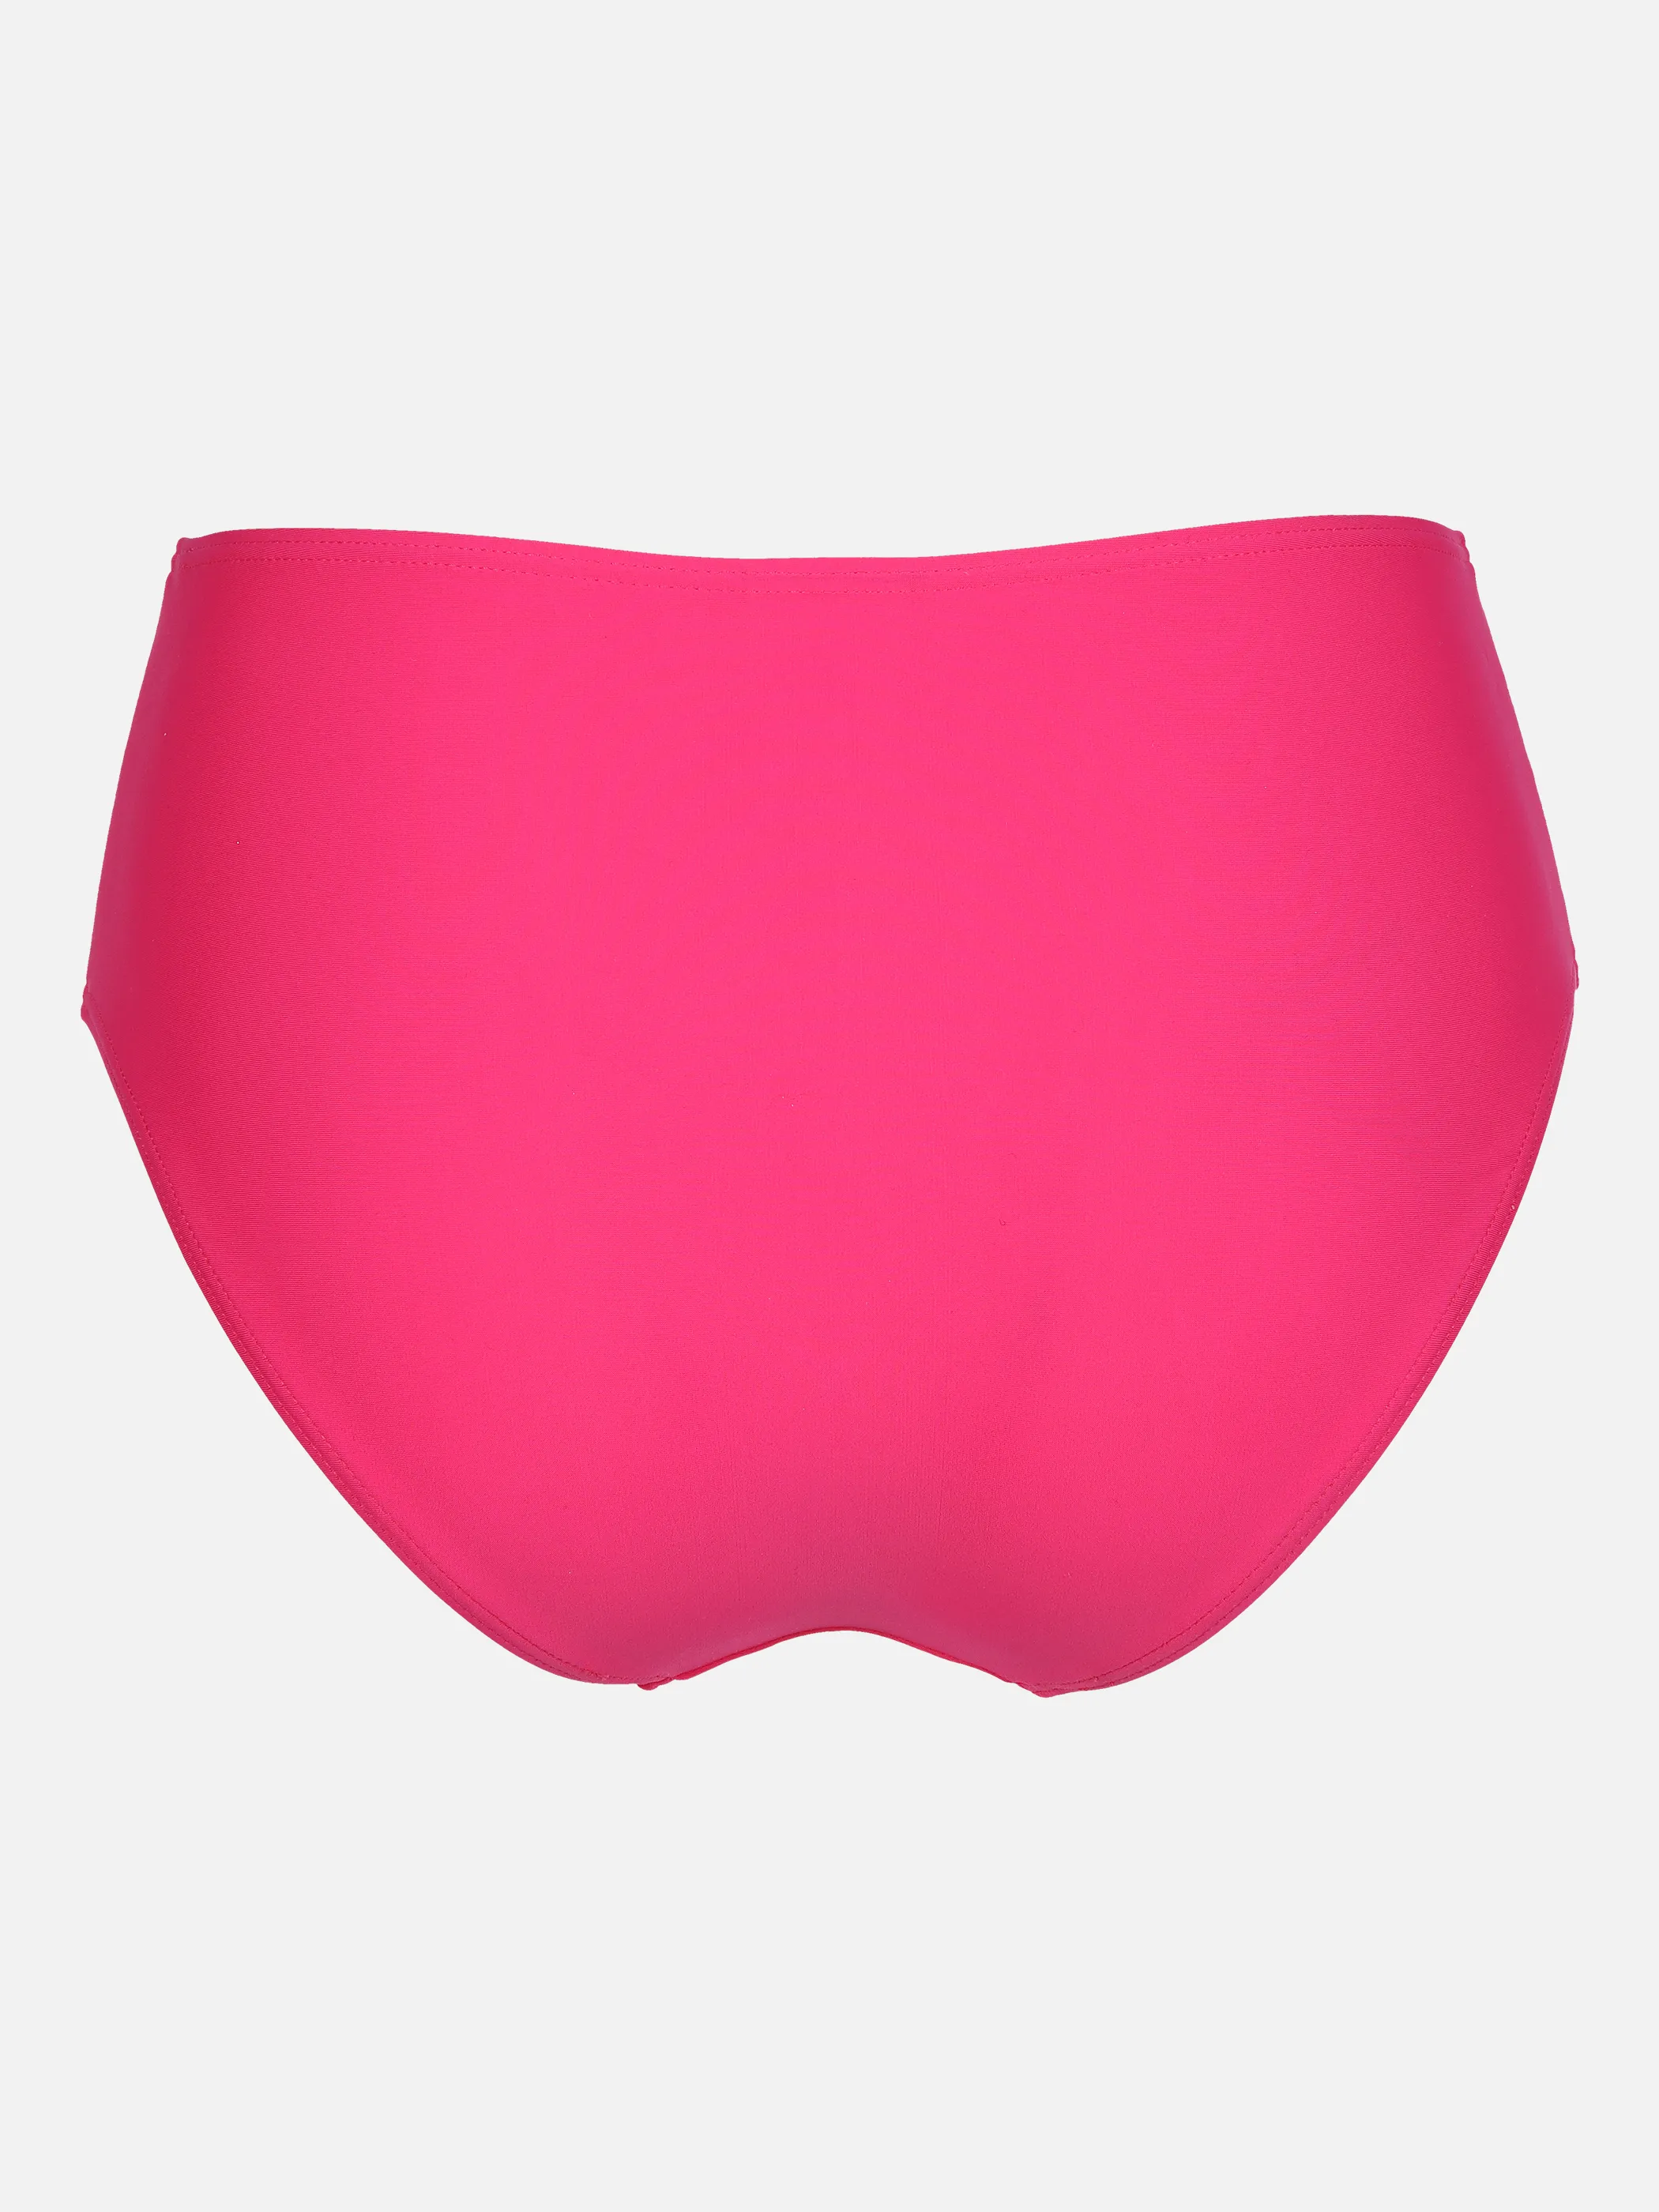 Grinario Sports Da-Bikini-Hose Pink 863019 PINK 2